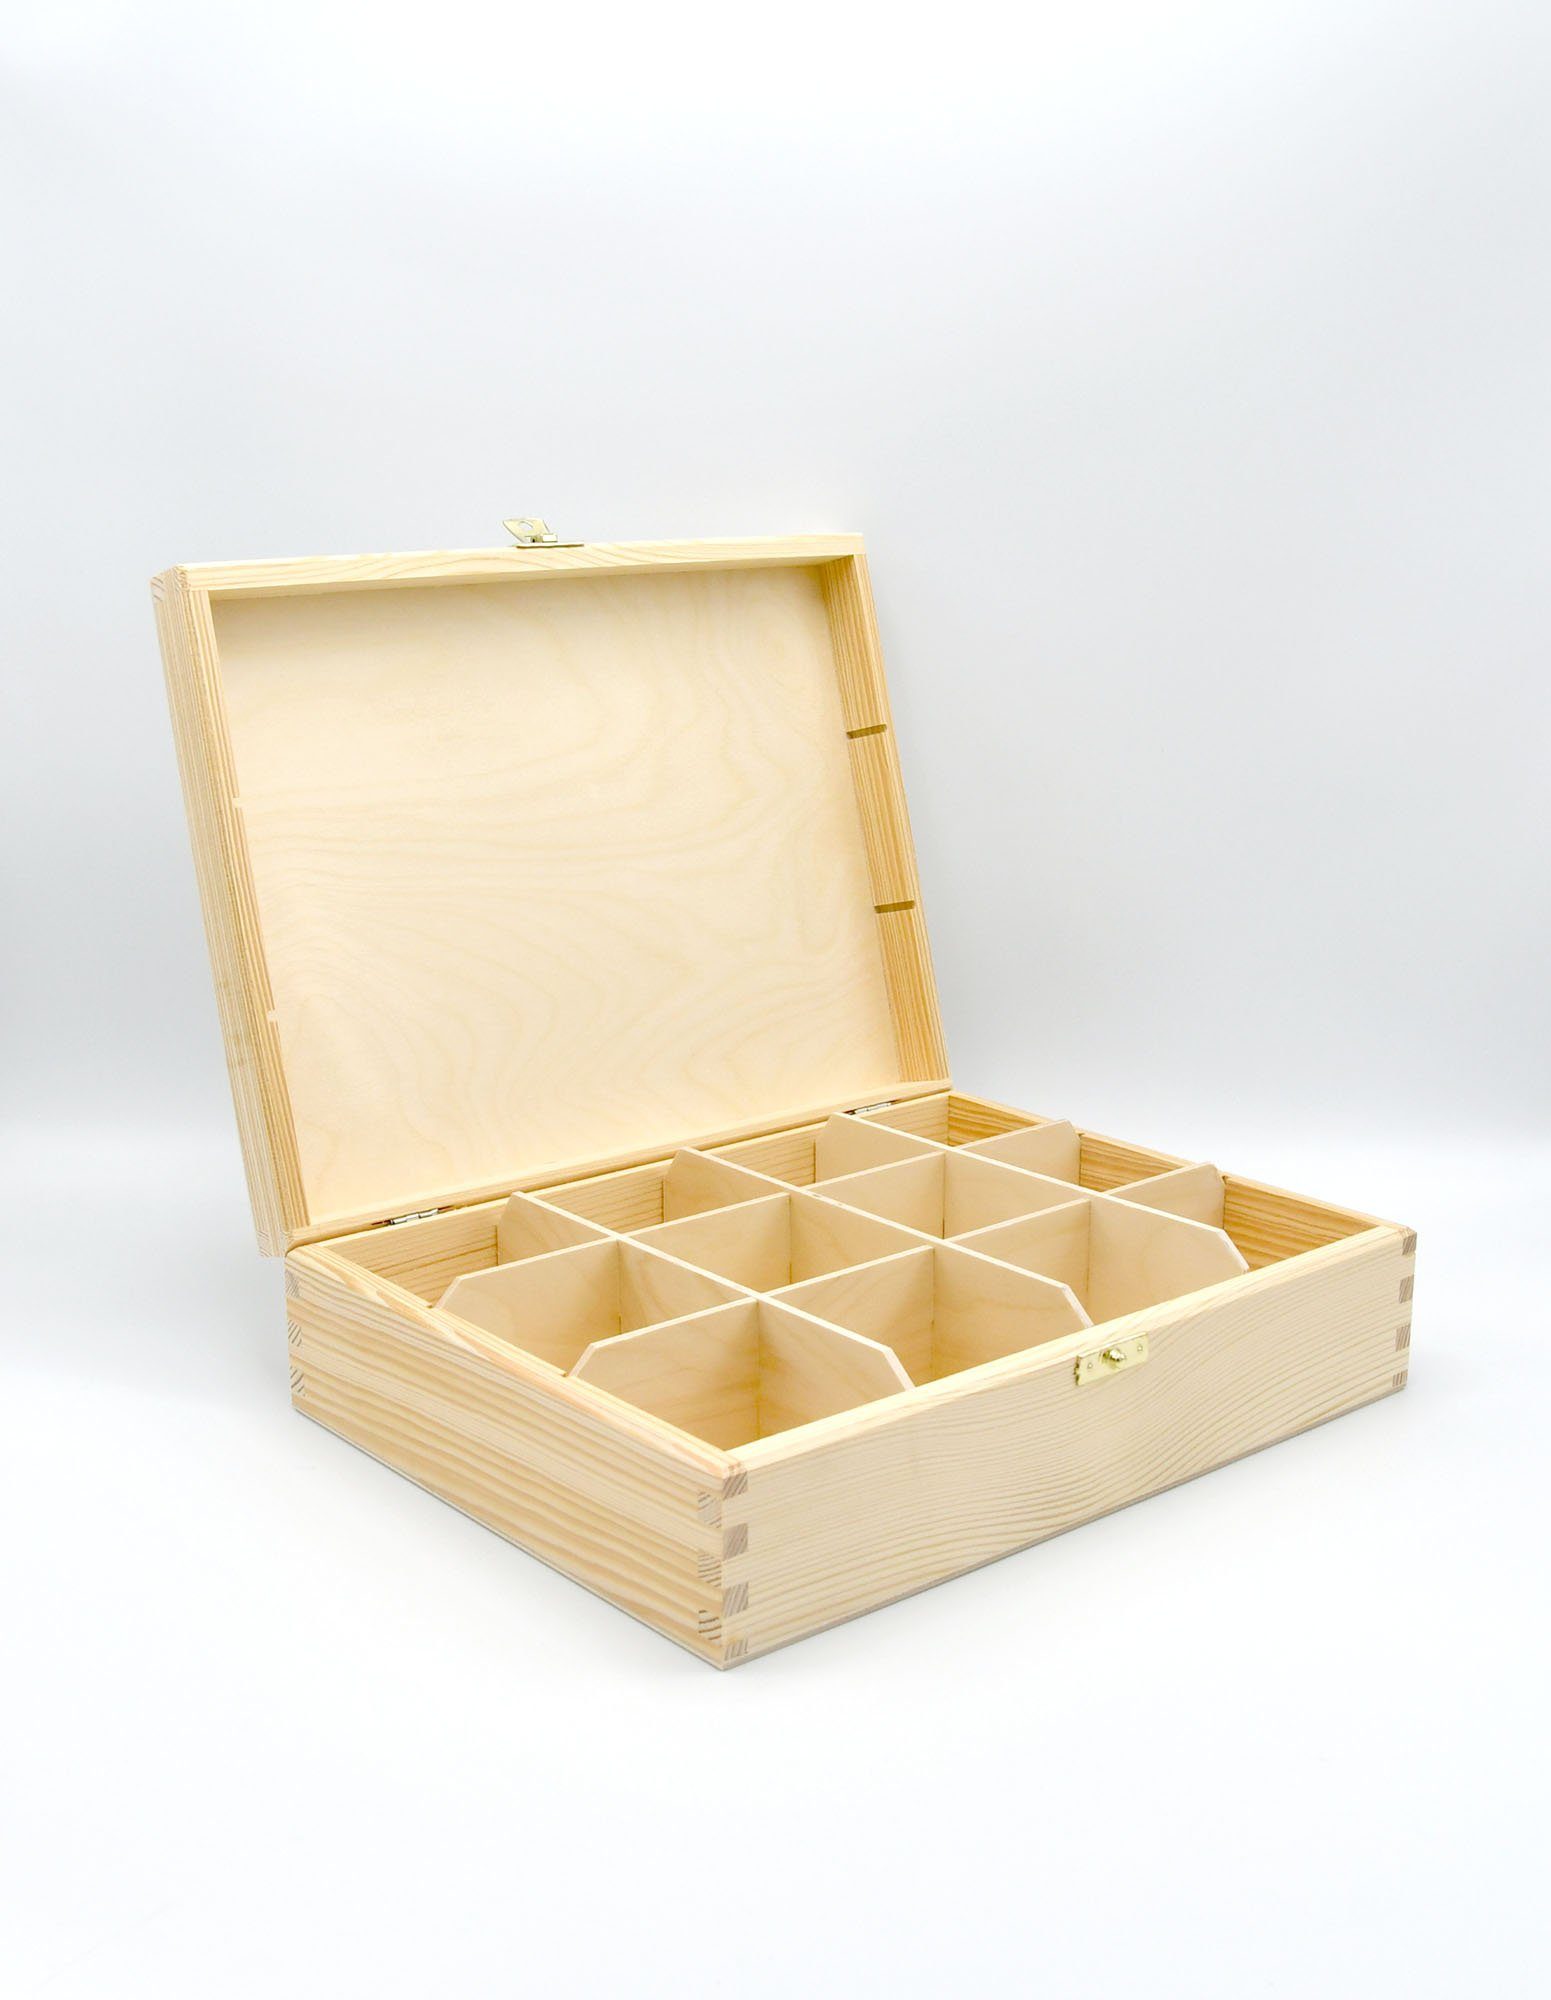 PM_PH312X, von Teebox Teebeuteln, Teebeutelbox Holz 12 Kaffeepads Teebox Fichtenholz MyBer® aus Aufbewahrung Gewürzen, Fächer